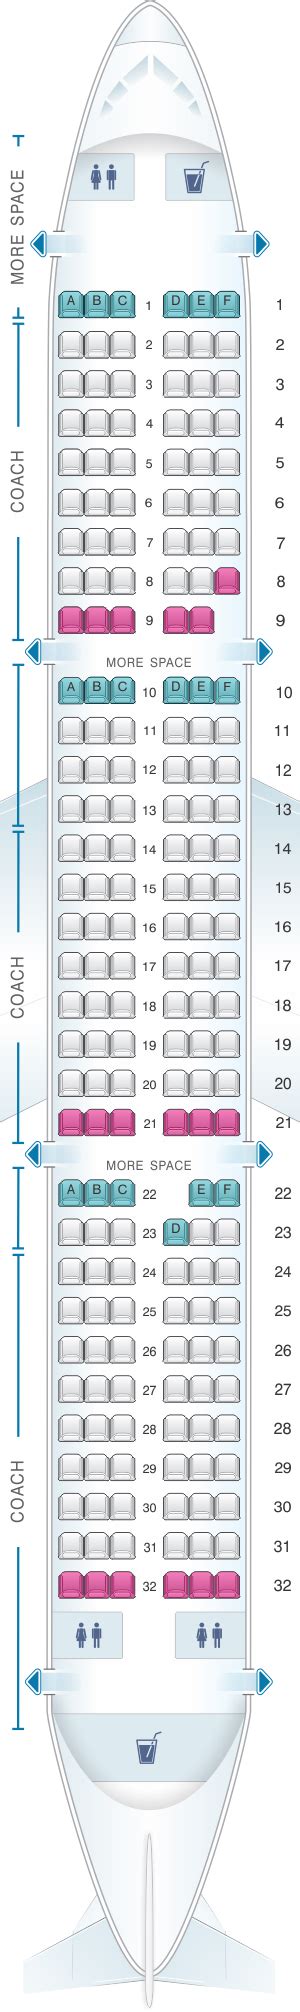 A320 Jetblue Seat Map